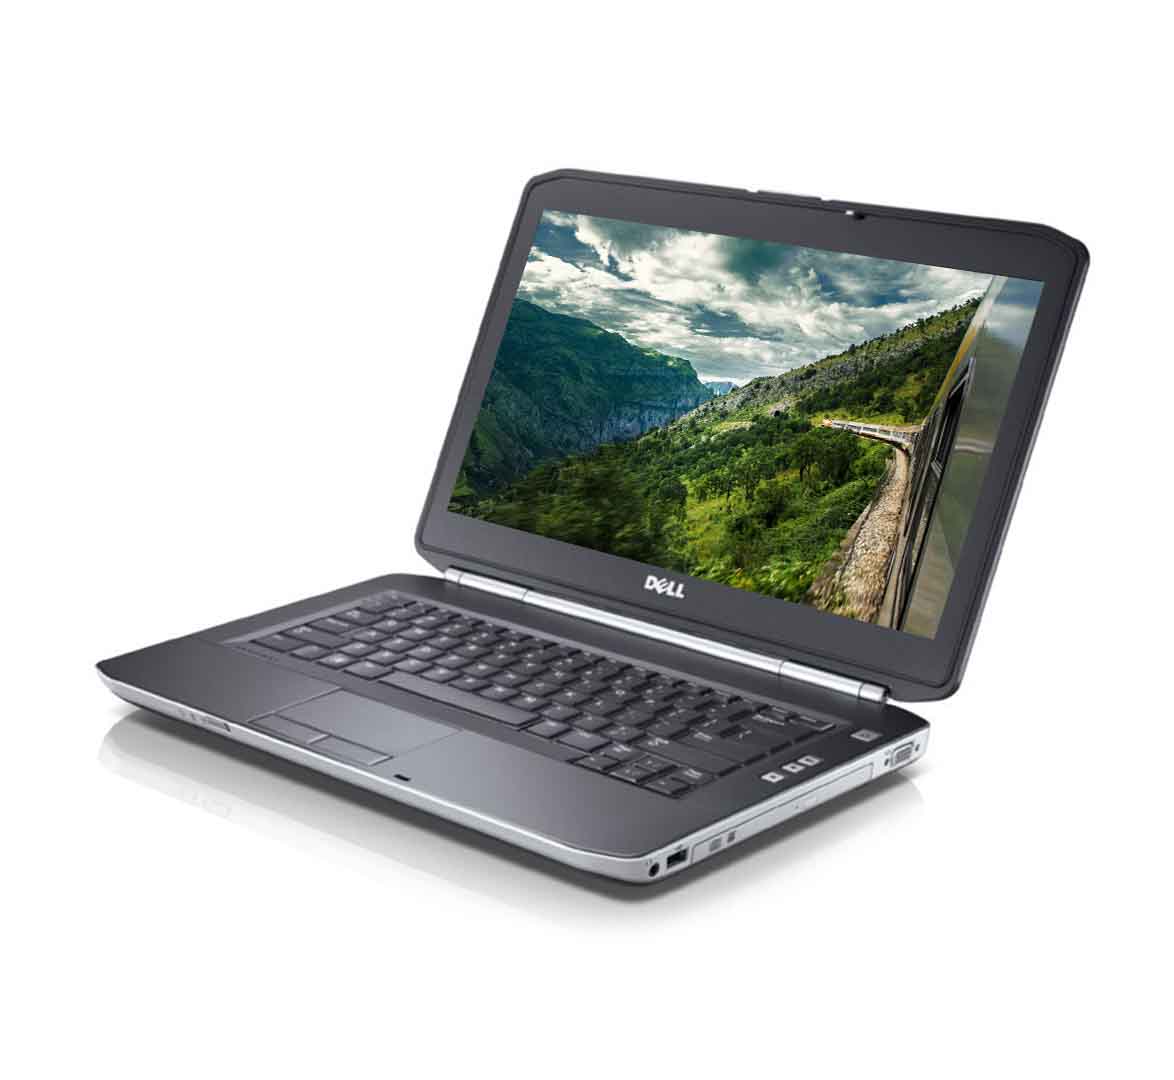 Dell Latitude E5420 Business Laptop, Intel Core i5-2nd Generation CPU, 4GB RAM, 320GB HDD, 14 Inch Display, Windows 10 Pro, Refurbished Laptop